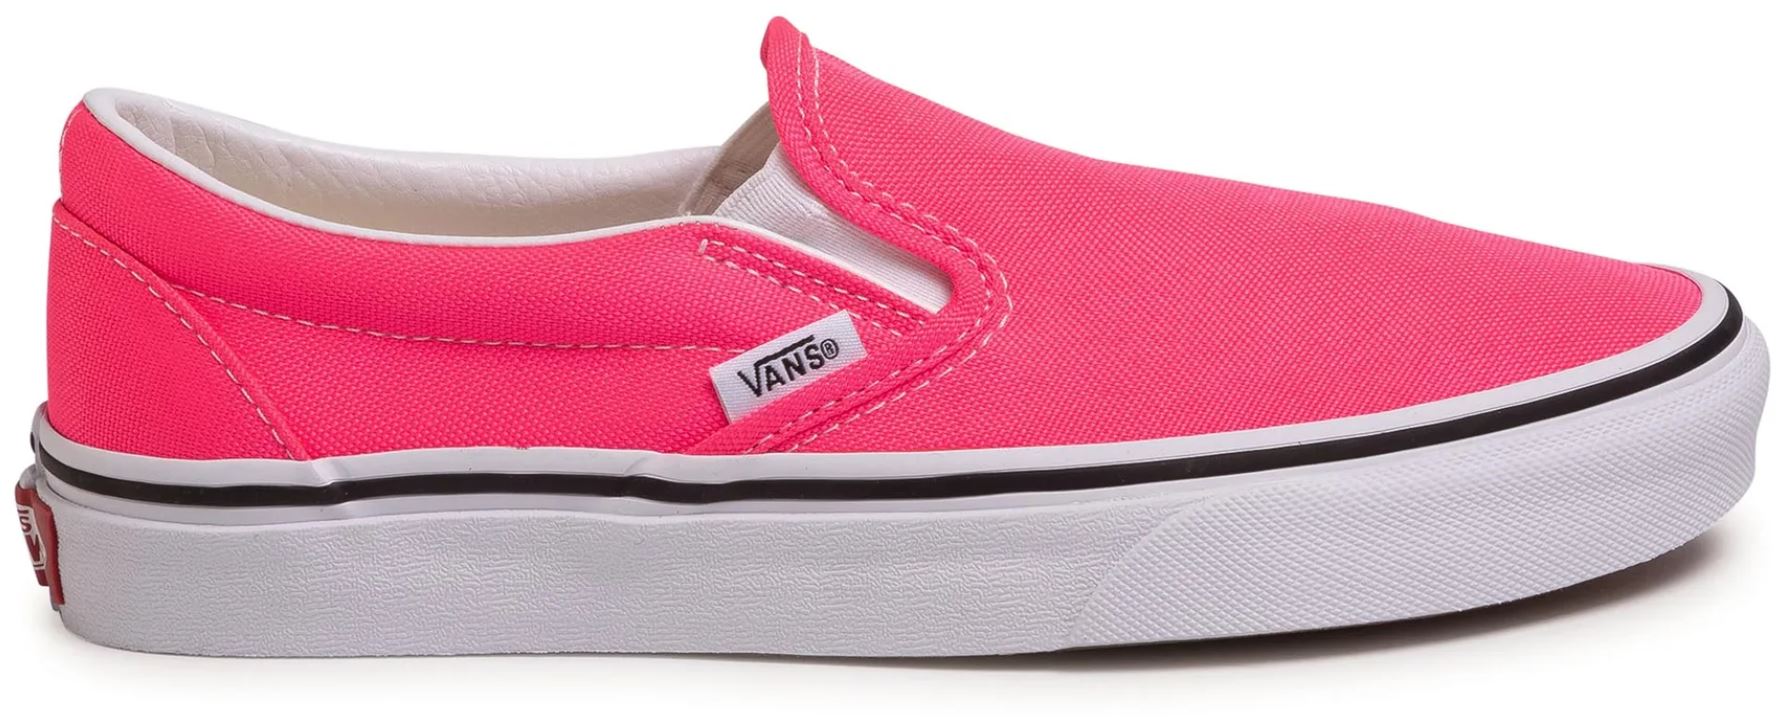 Dámské boty VANS Wmns Slip-On Neon Classic Pink|42